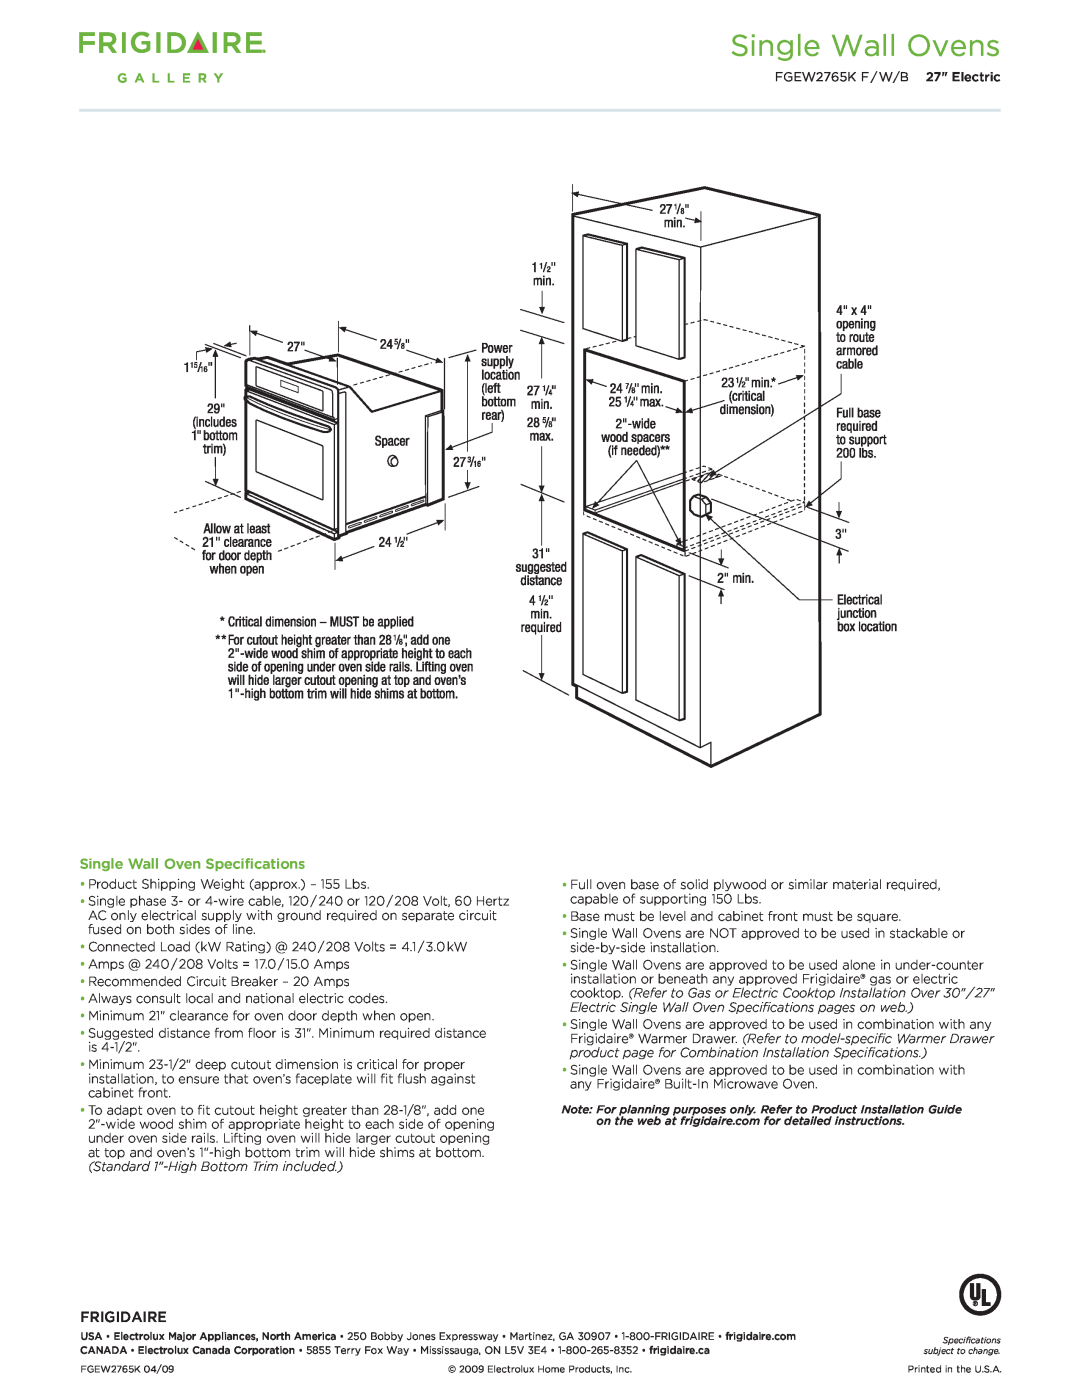 Frigidaire FGEW2765K dimensions Single Wall Oven Specifications, Frigidaire, Single Wall Ovens 